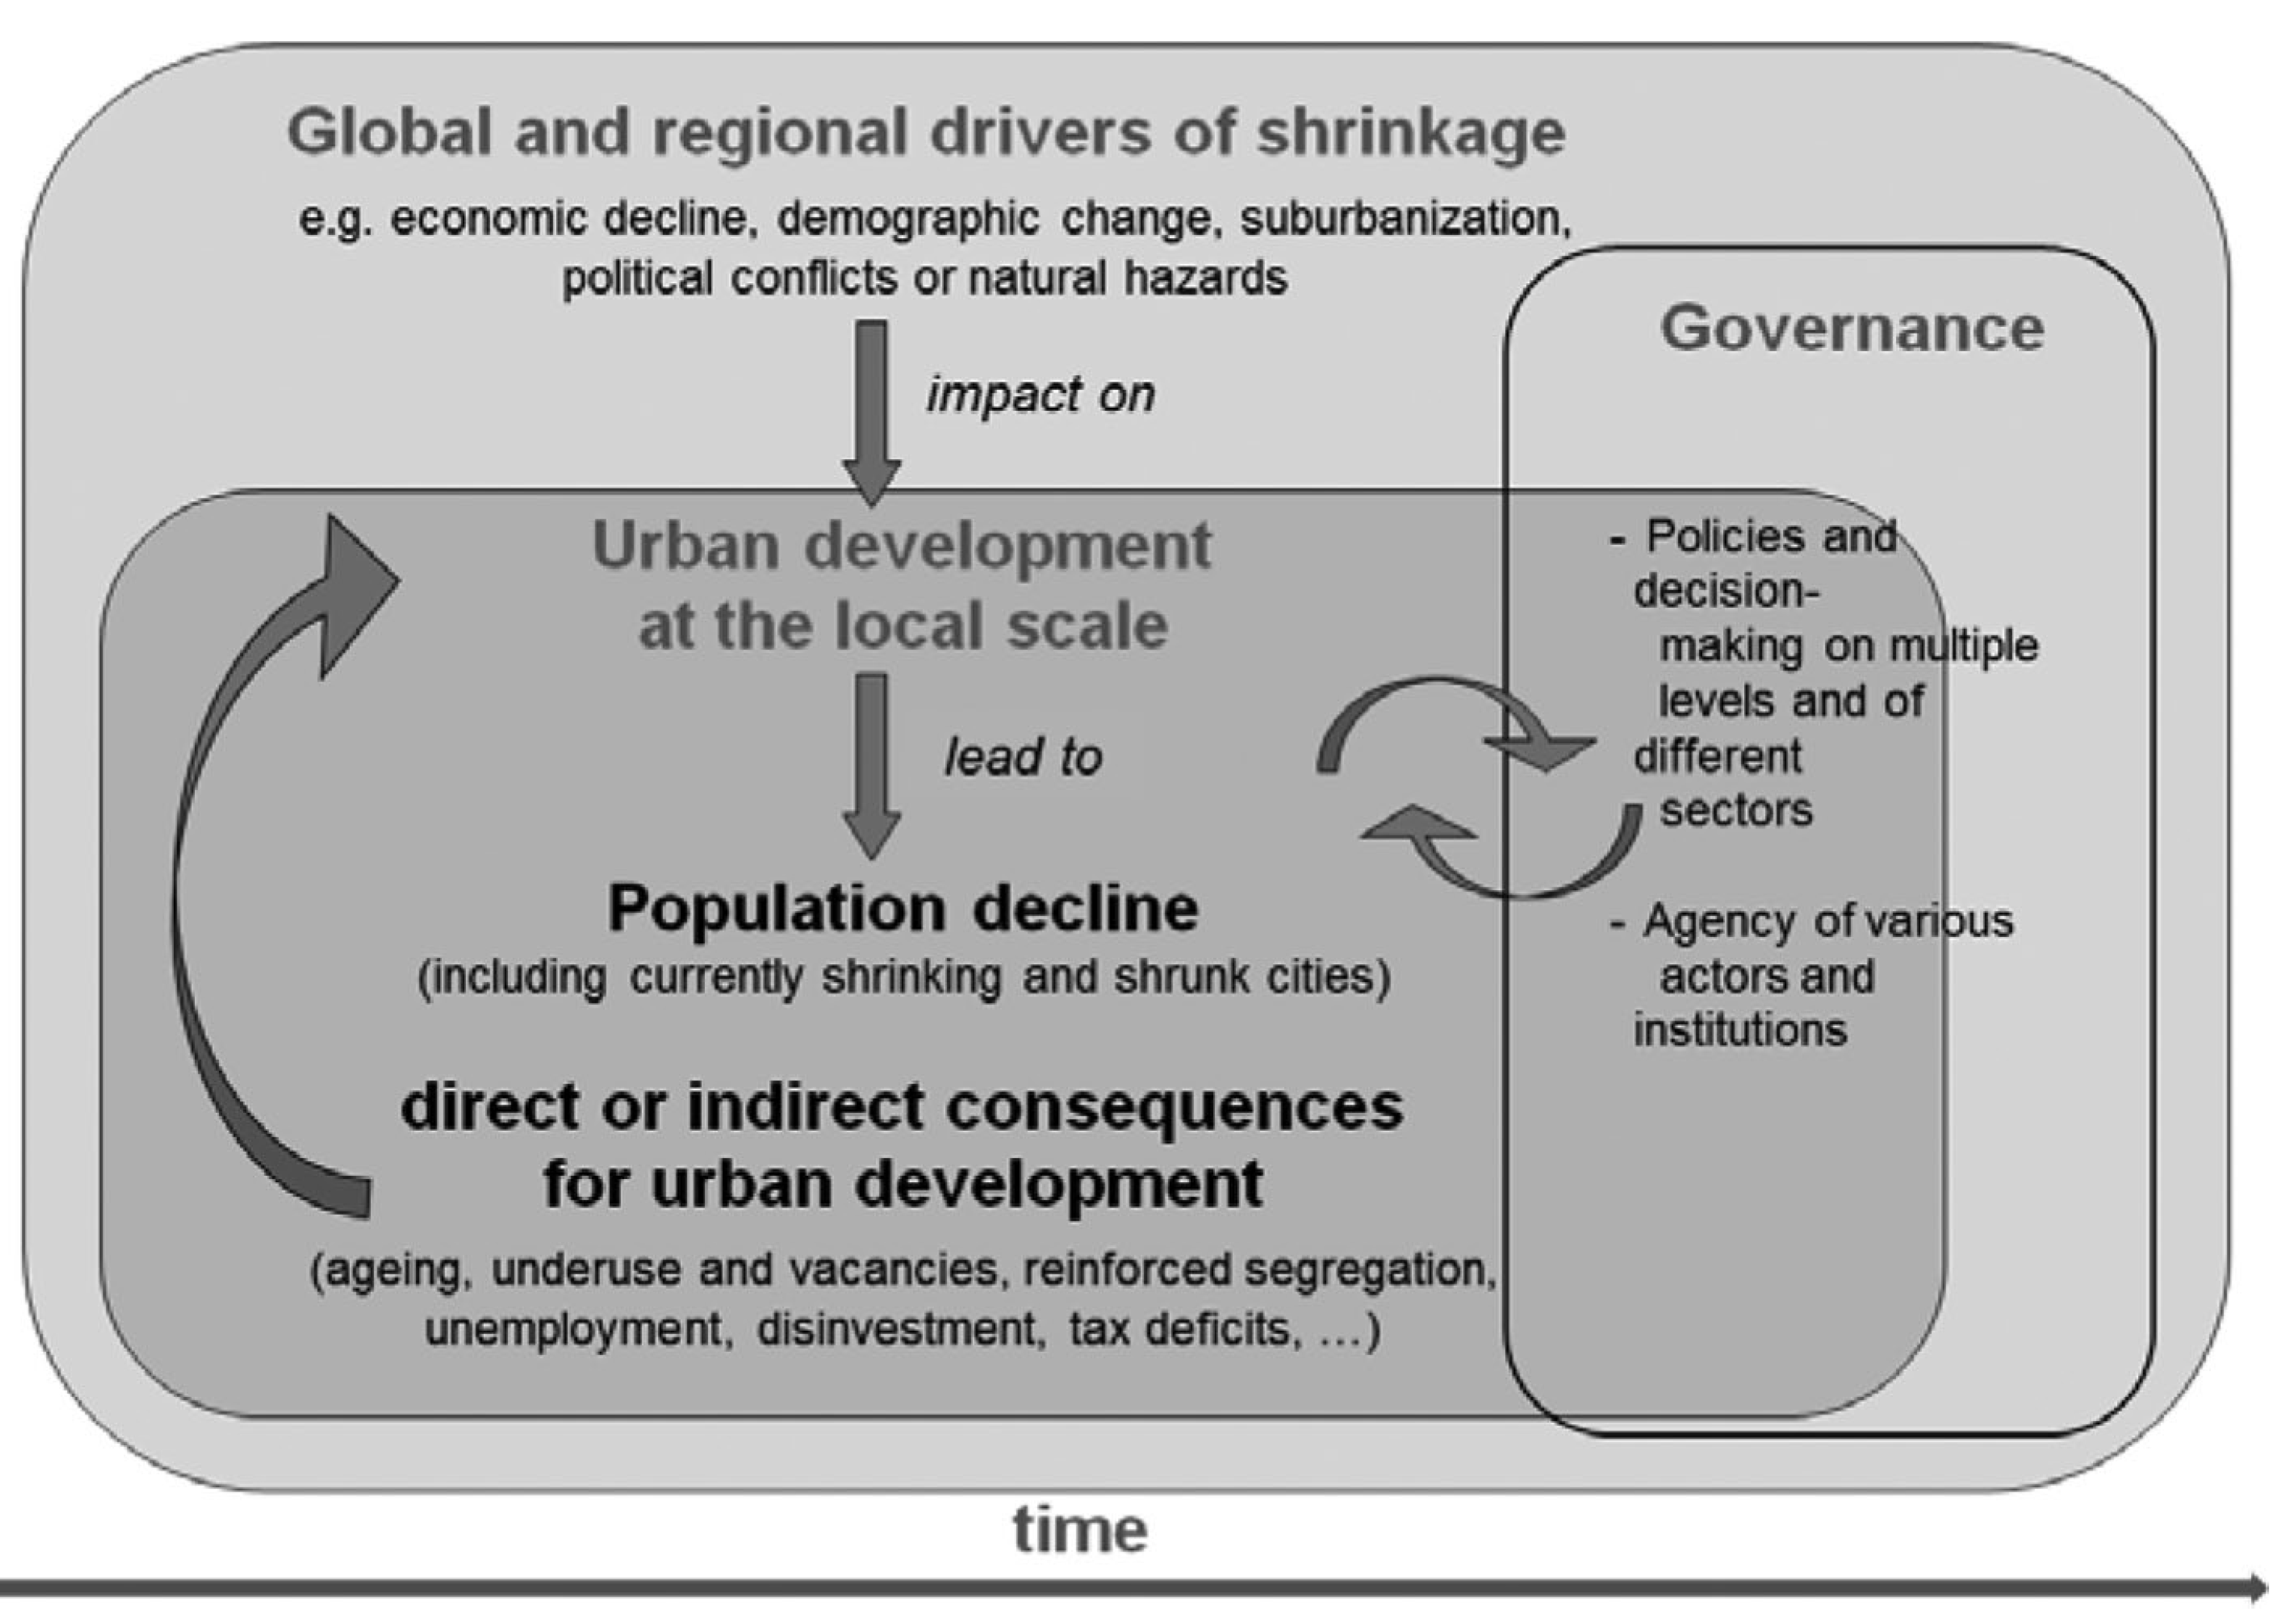 Conceptual model of urban shrinkage